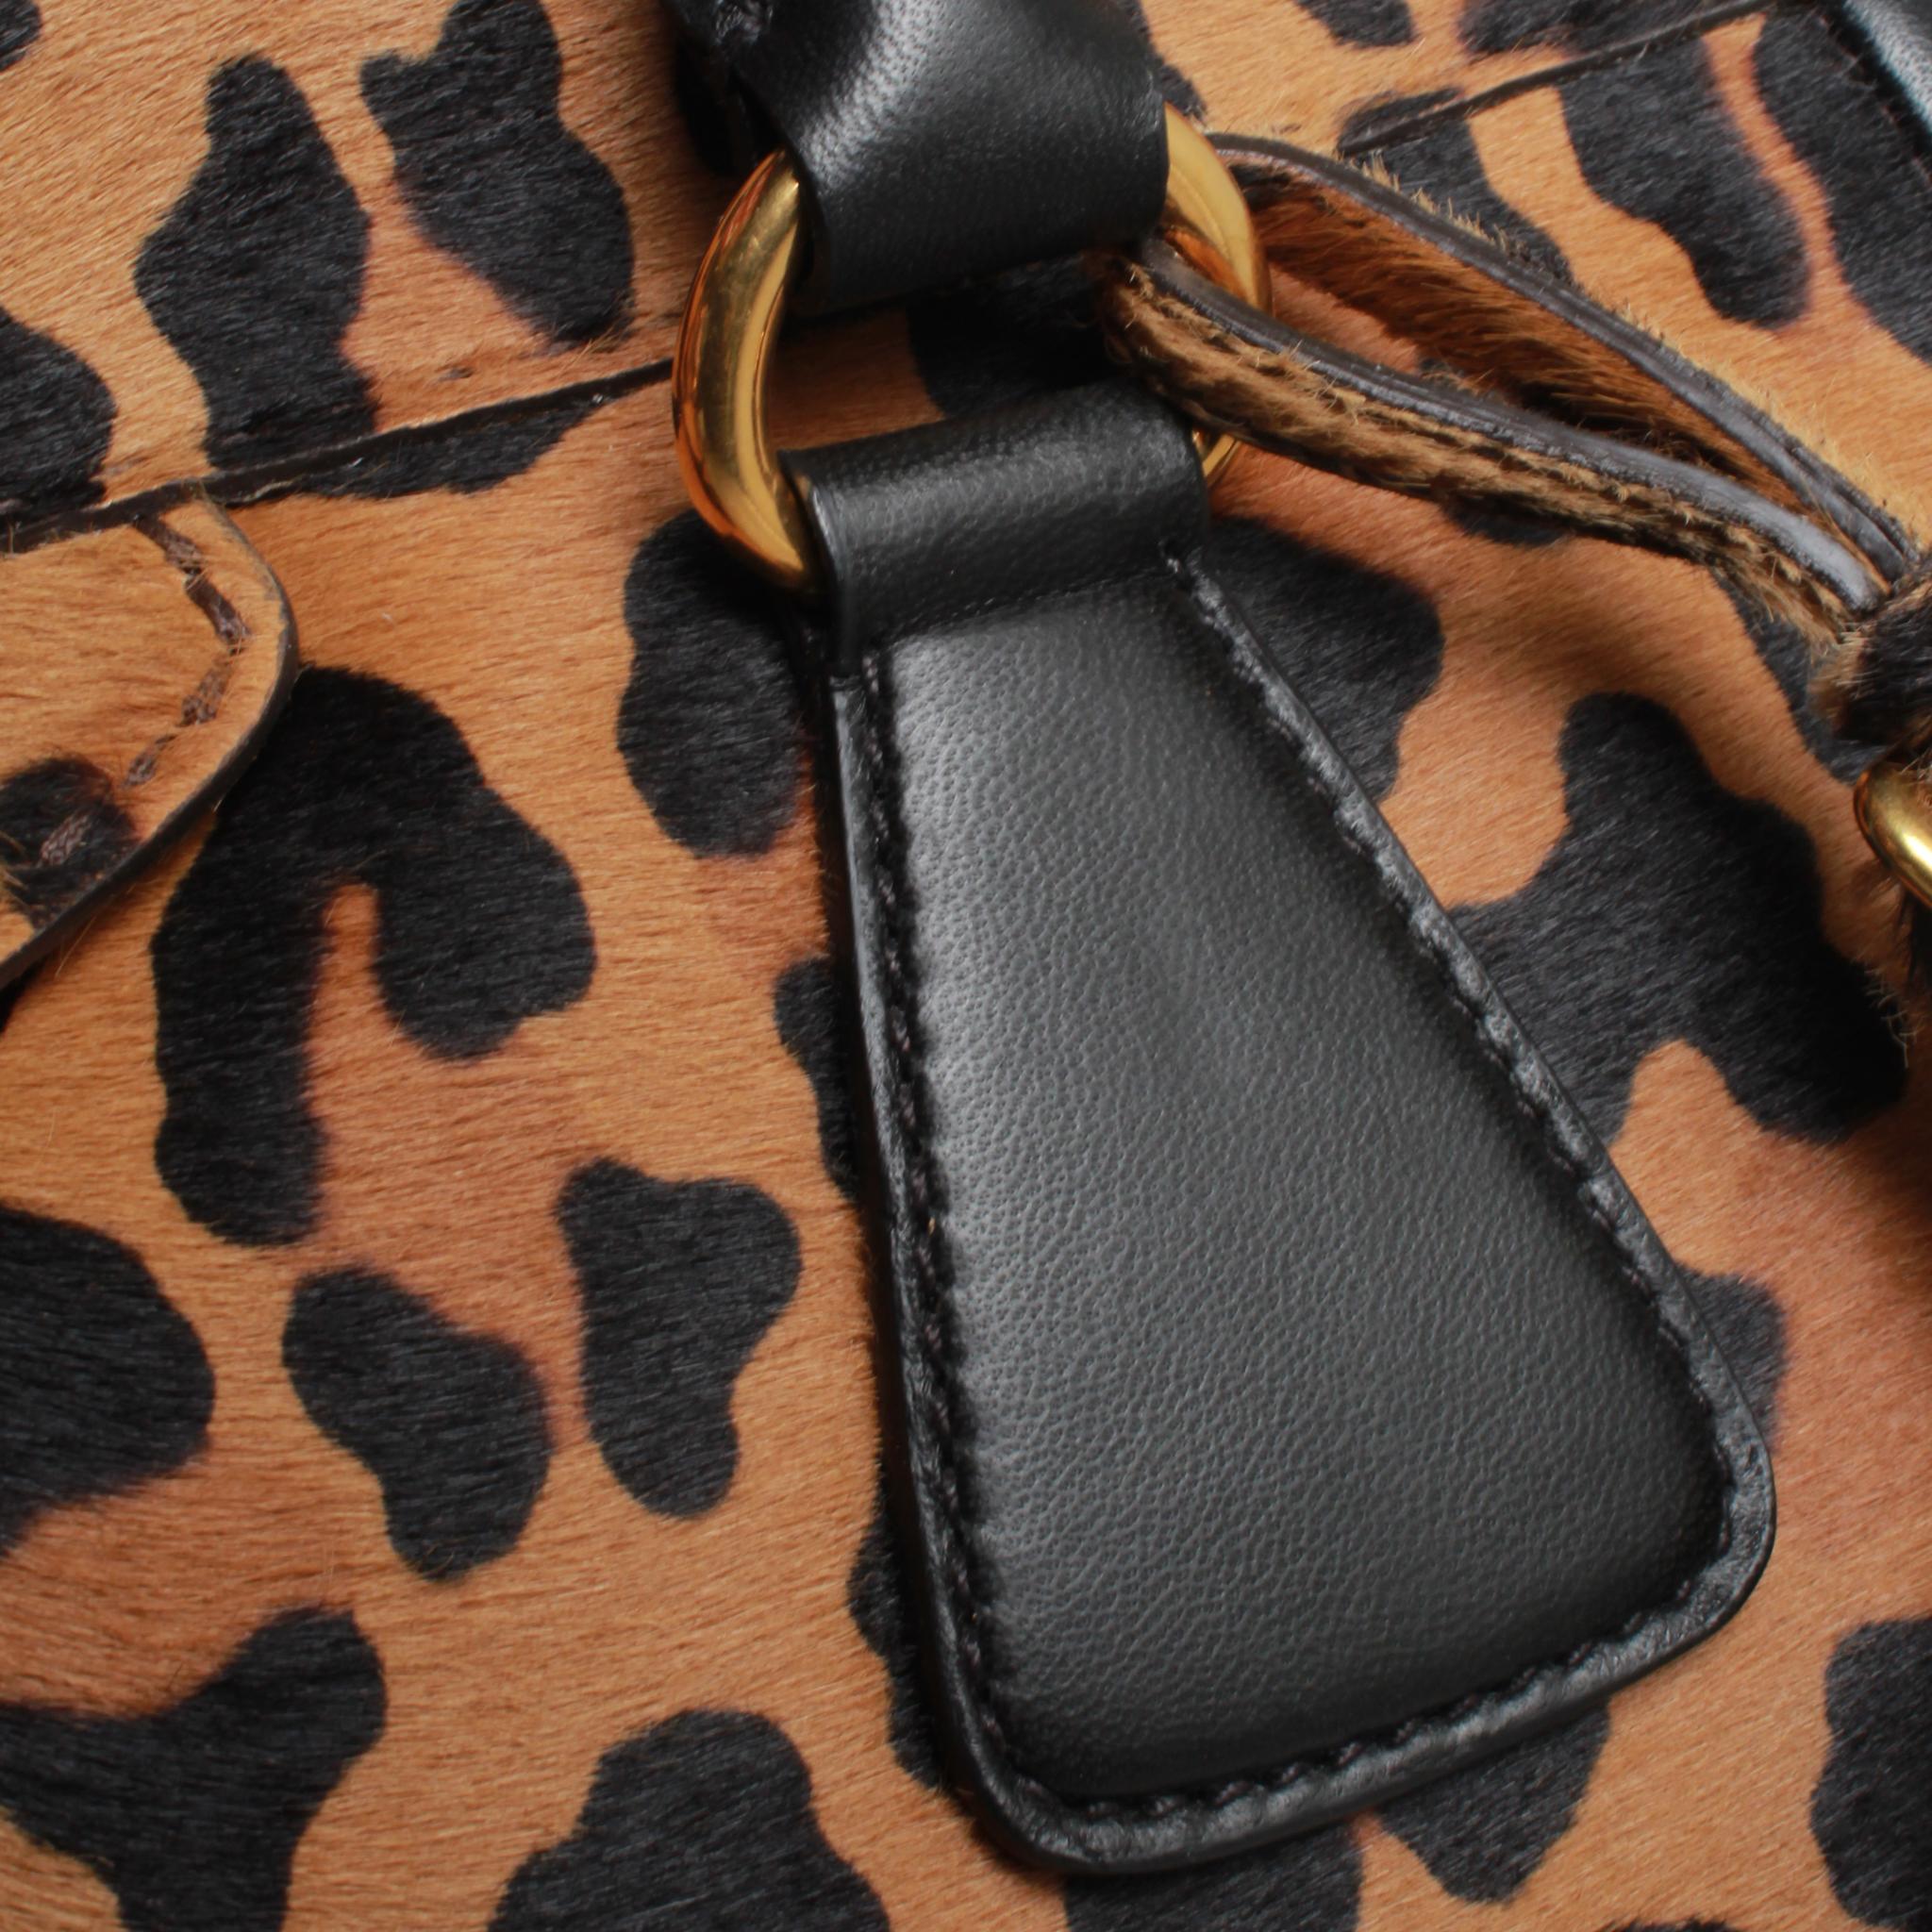 PRADA Leopard Print Handbag In Fair Condition For Sale In Melbourne, Victoria